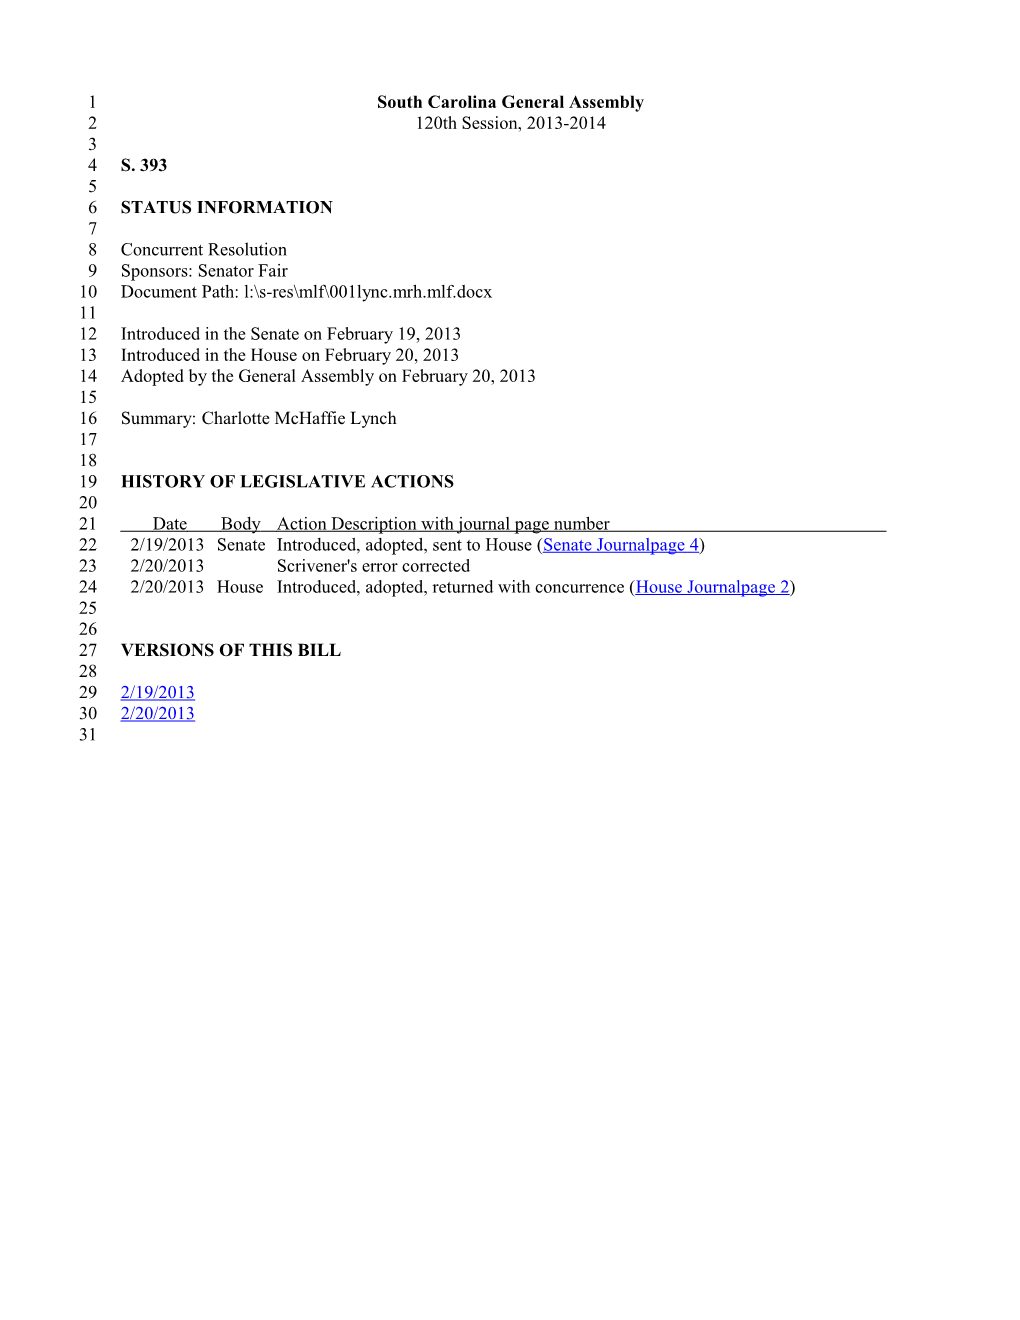 2013-2014 Bill 393: Charlotte Mchaffie Lynch - South Carolina Legislature Online